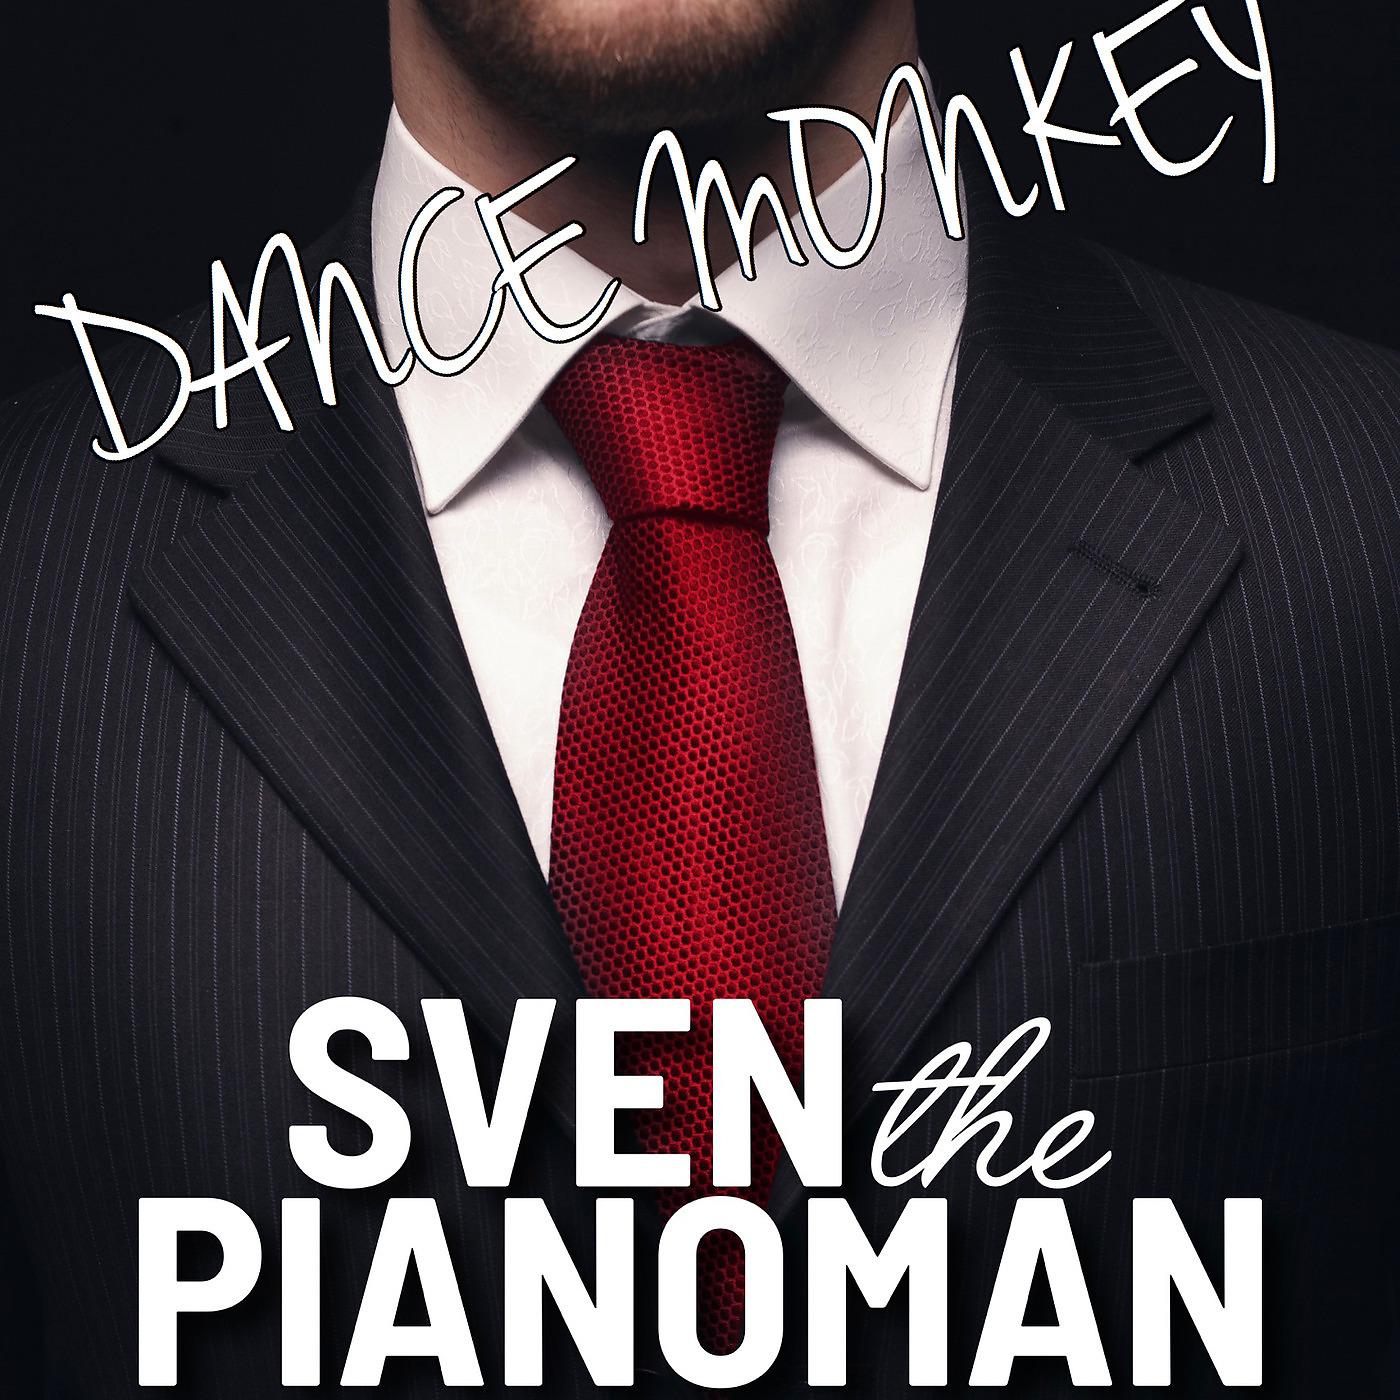 Постер альбома Dance Monkey (Cover)